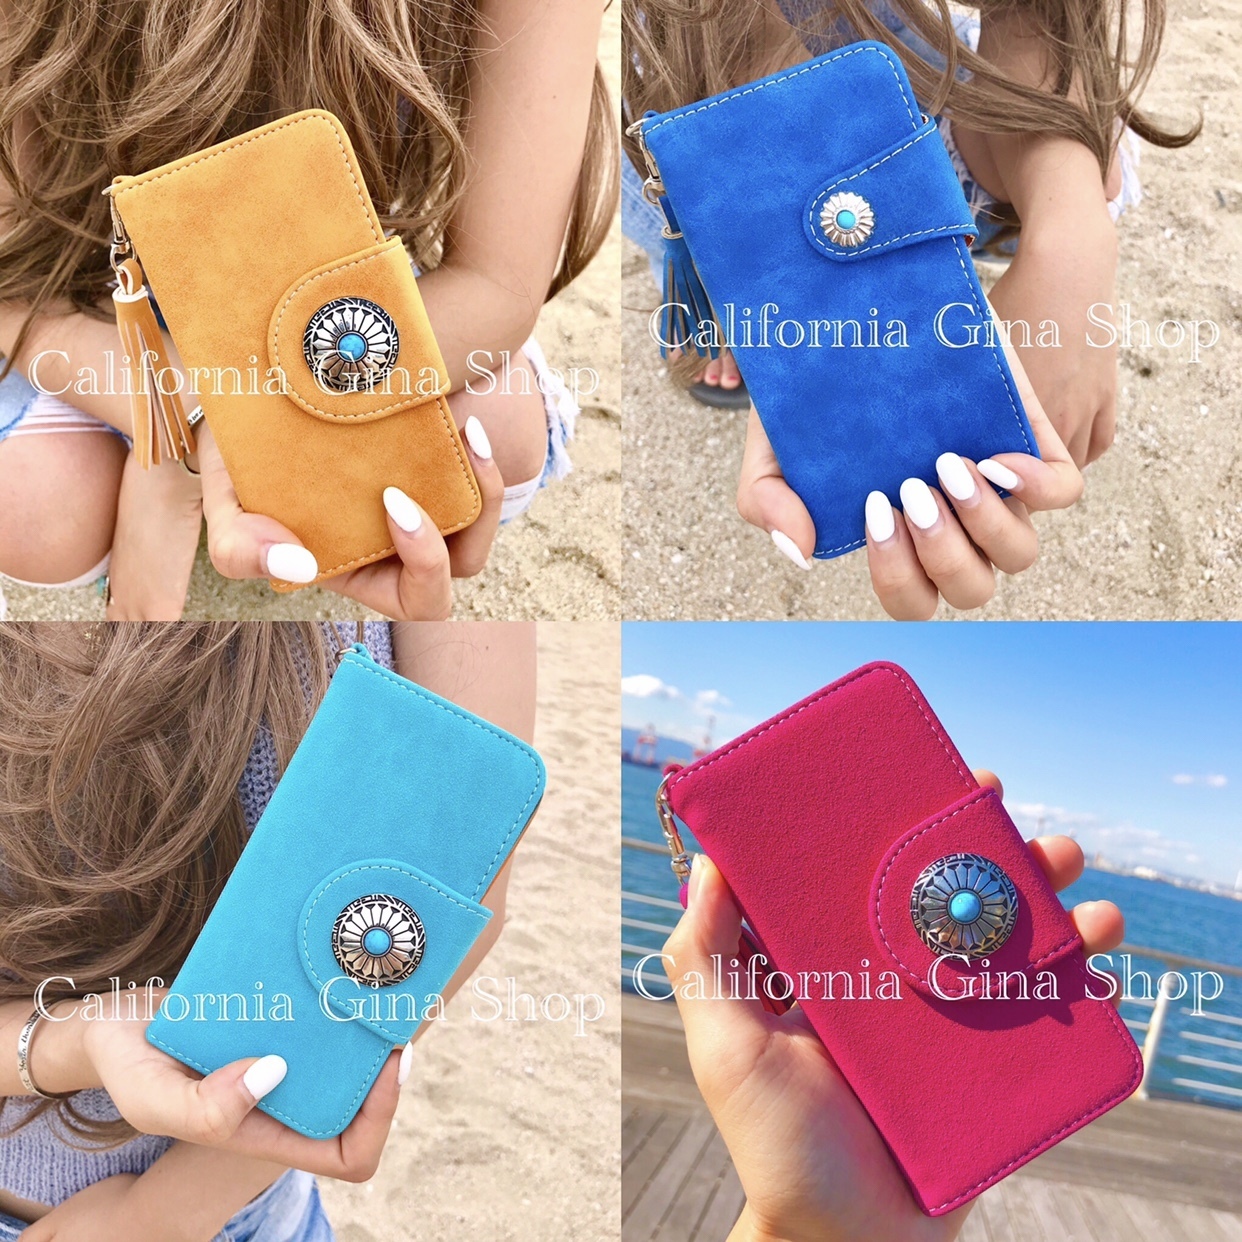 B級品 訳アリsale 即納 4種類の中から選べる西海岸iphoneケース 手帳型 海 夏 Gina California Shop